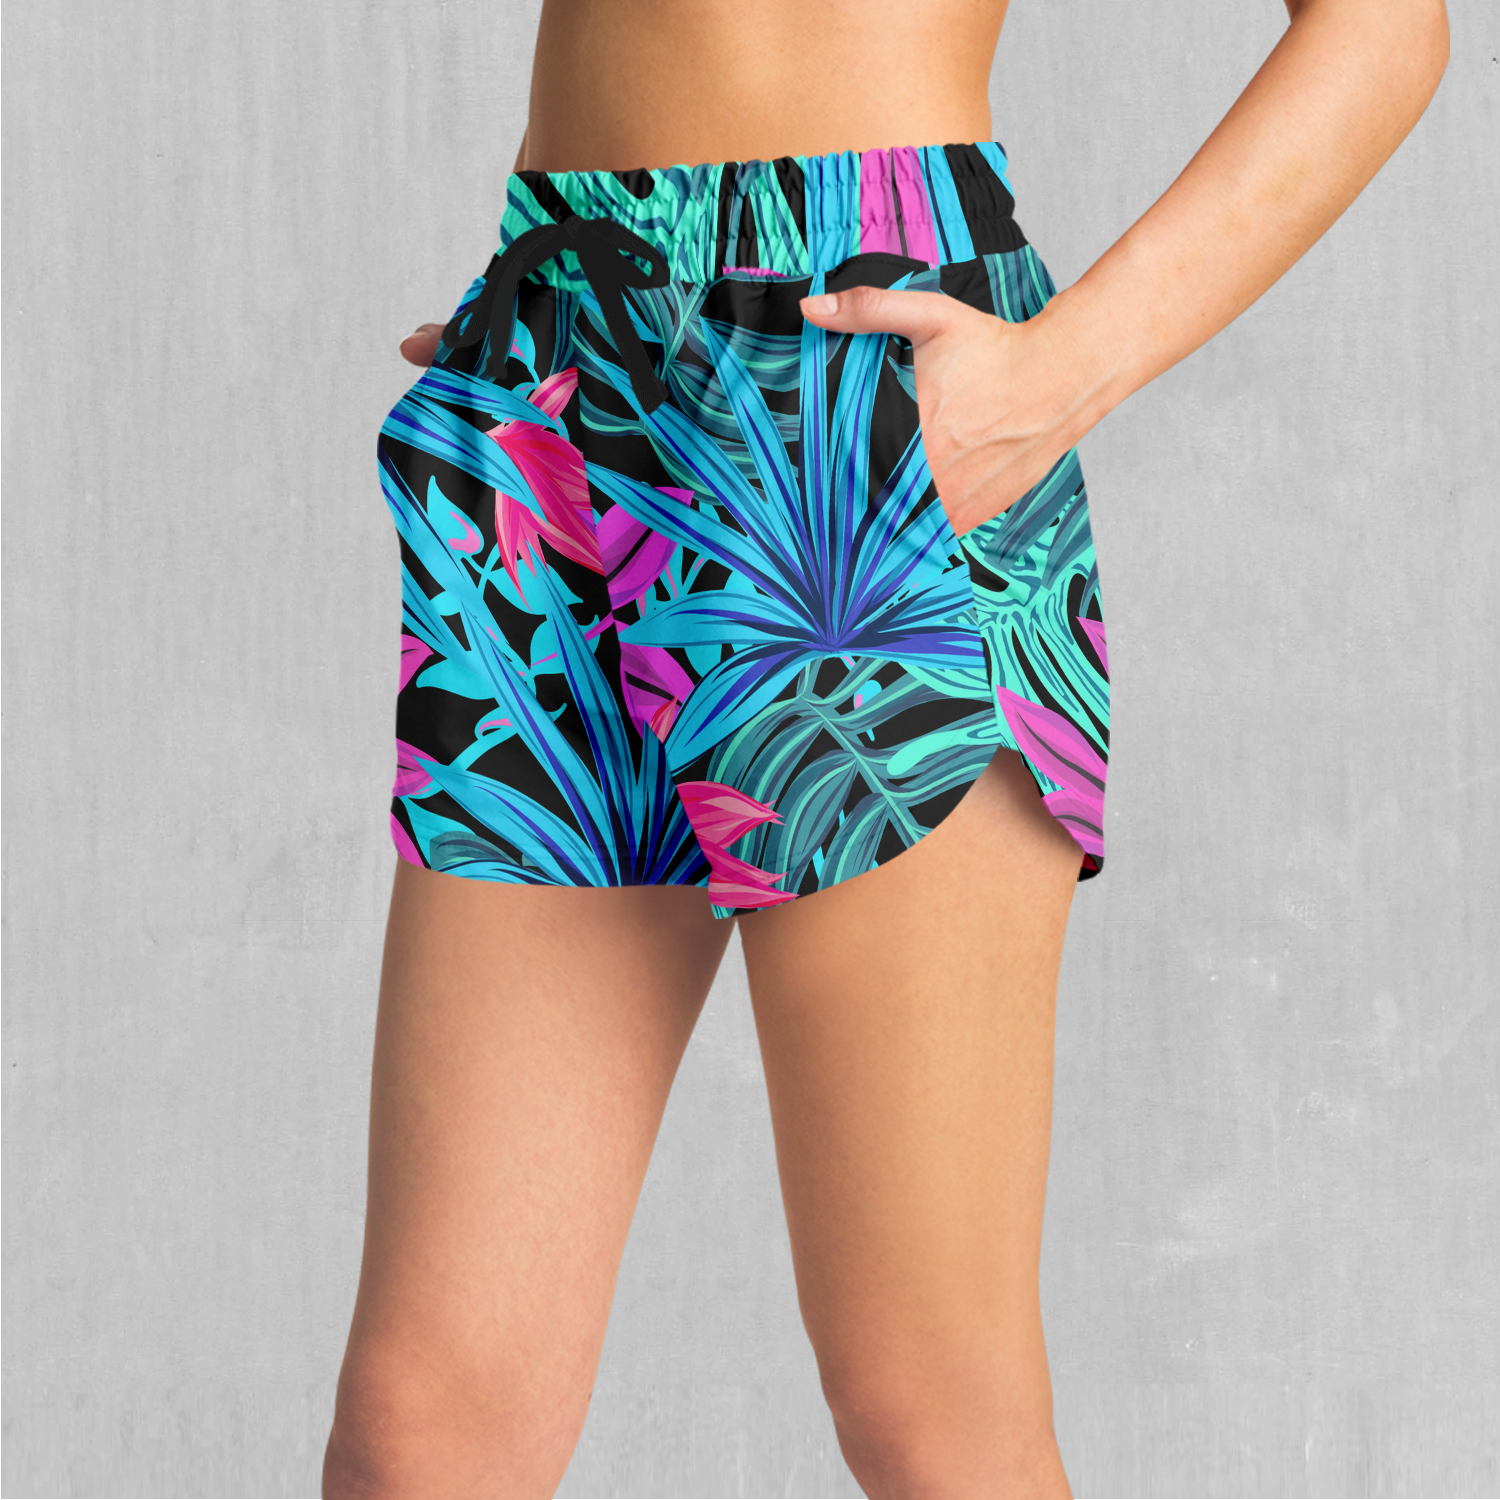 Neon Jungle Women's Tank Top - Azimuth Clothing